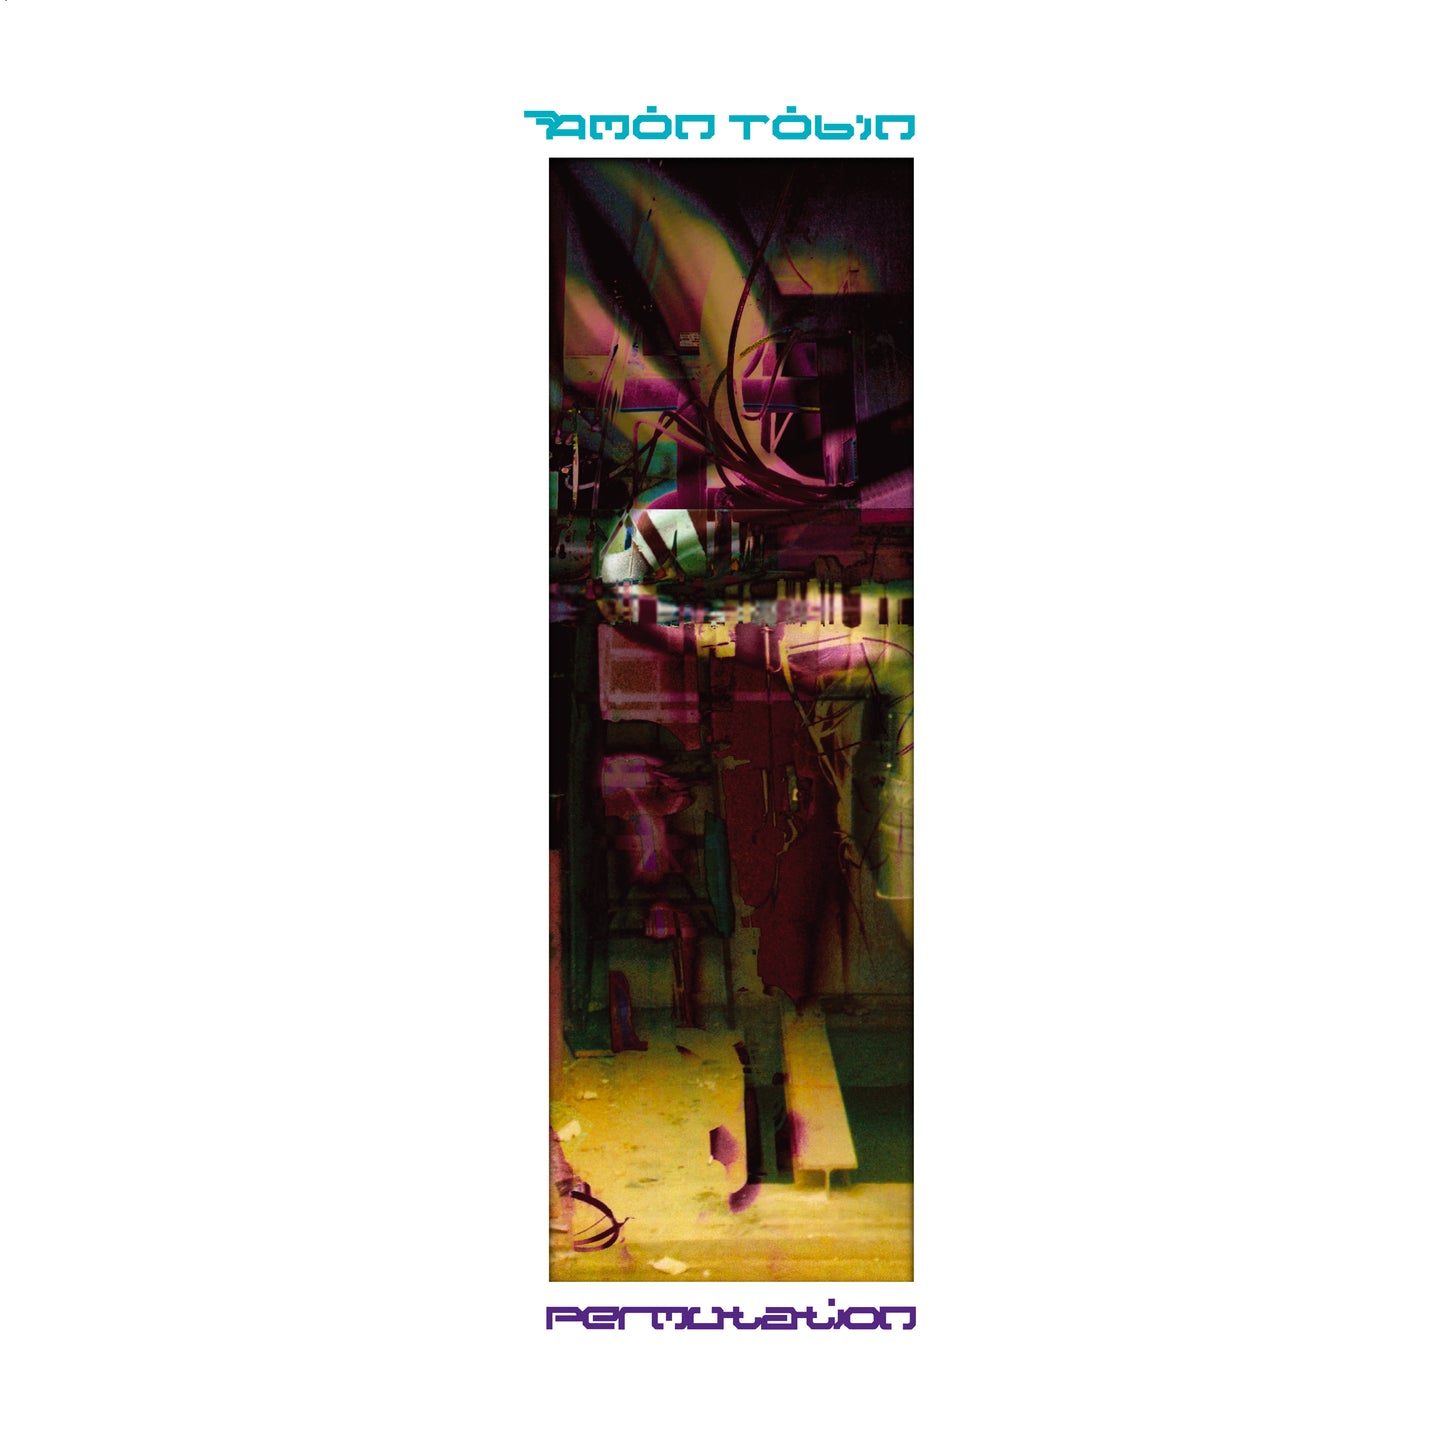 Amon Tobin 'Permutation - 25 Year Anniversary Reissue' 2xLP